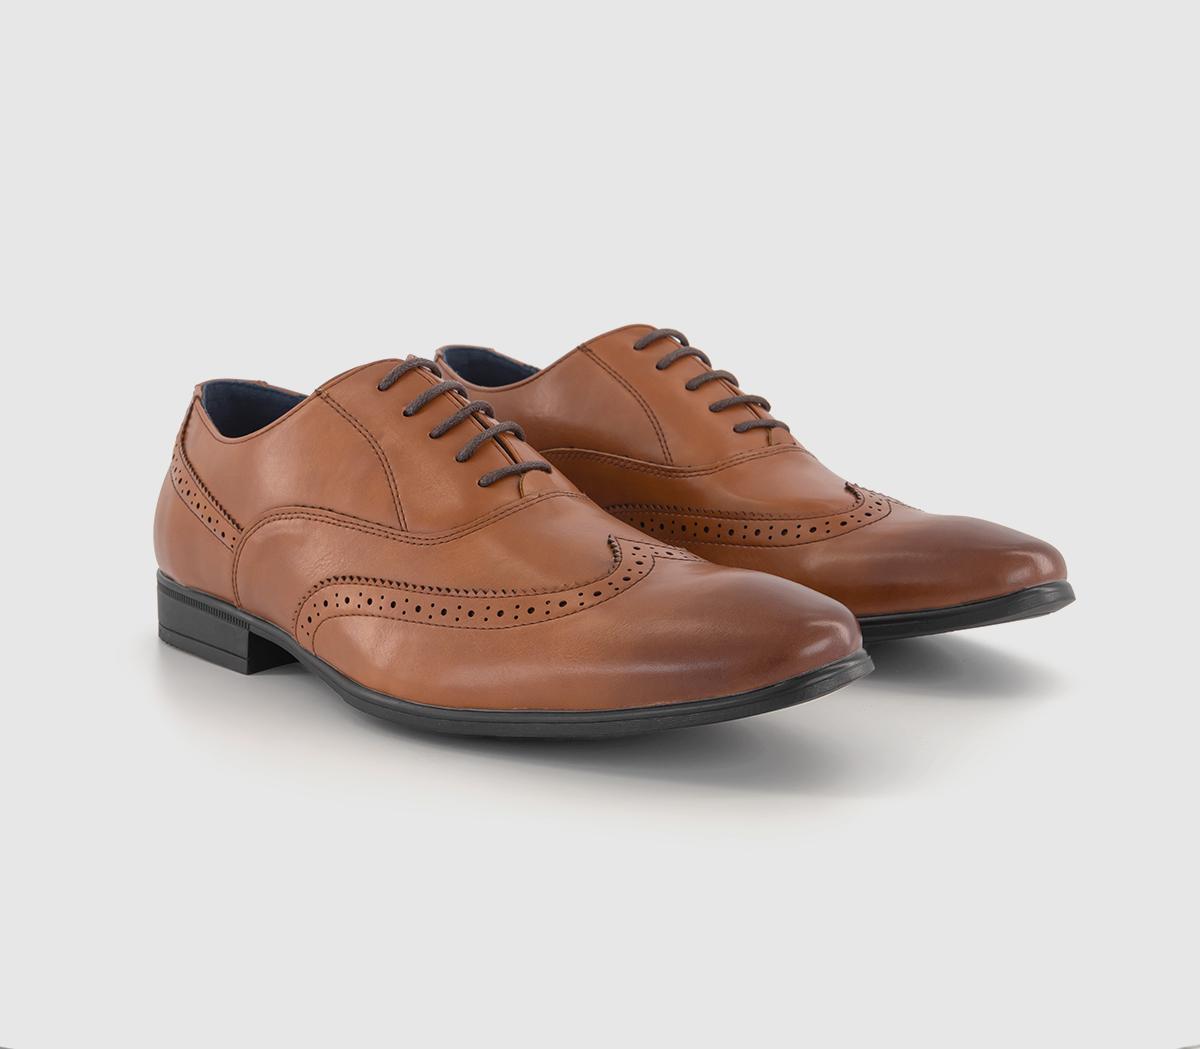 OFFICE Mens Martel Wingtip Oxford Shoes Tan, 9